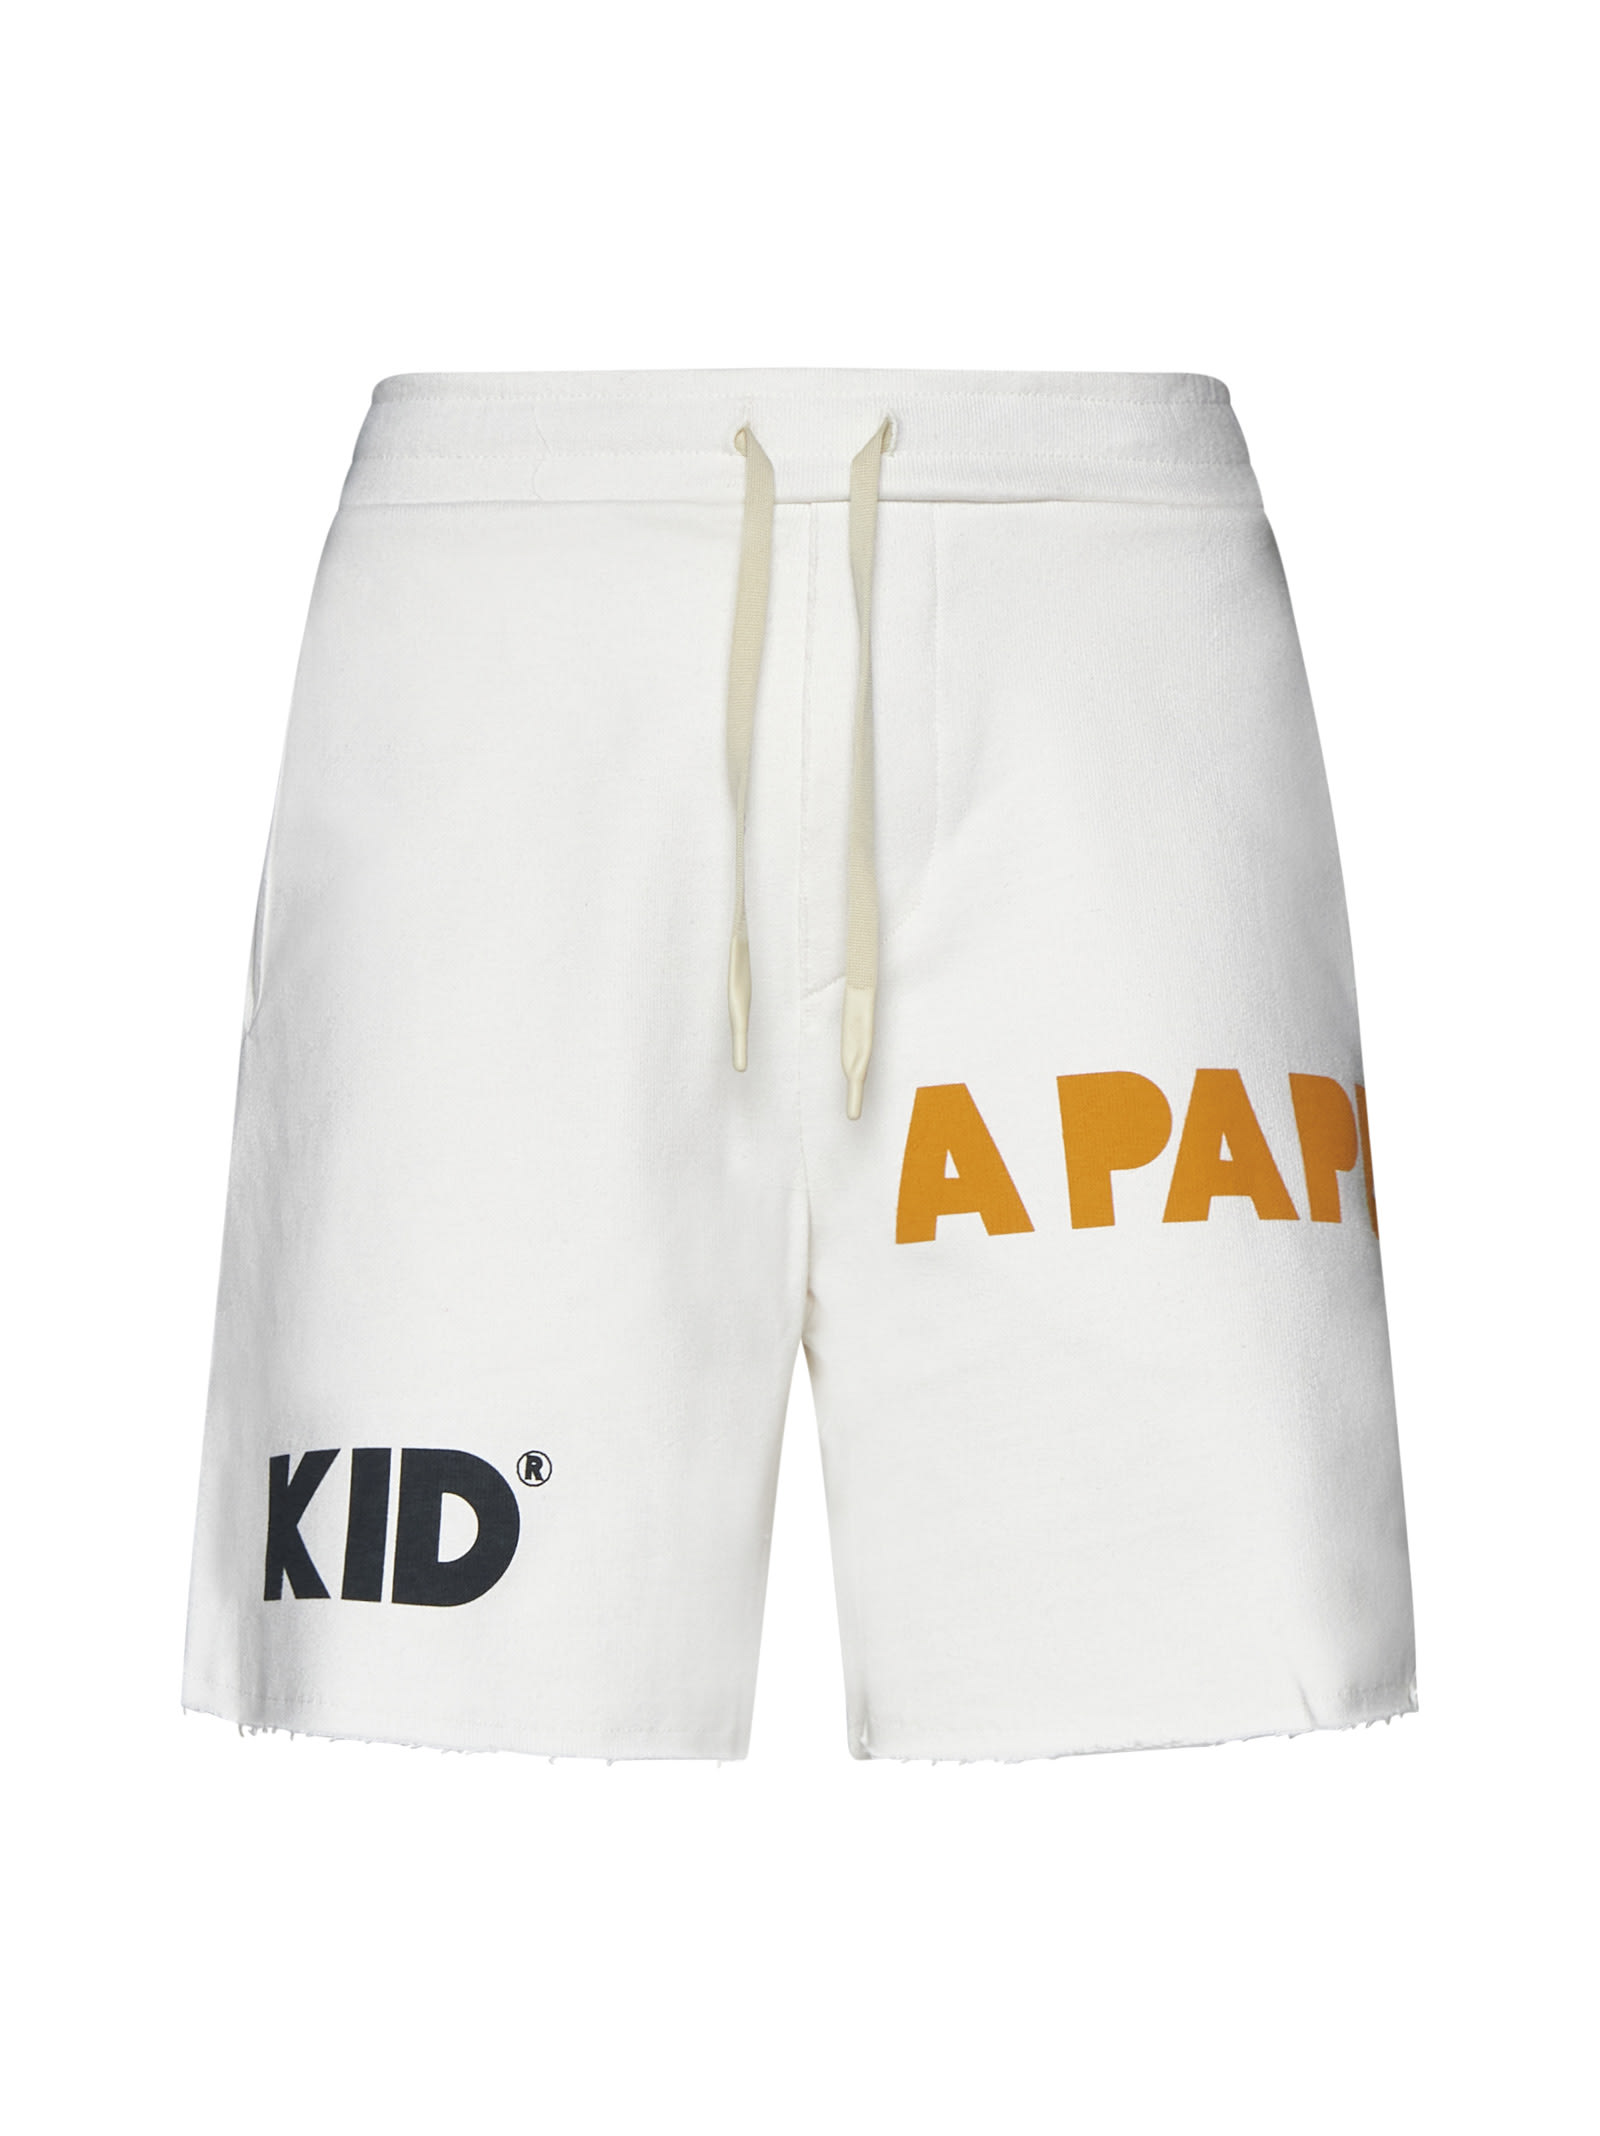 A Paper Kid Shorts In Cream